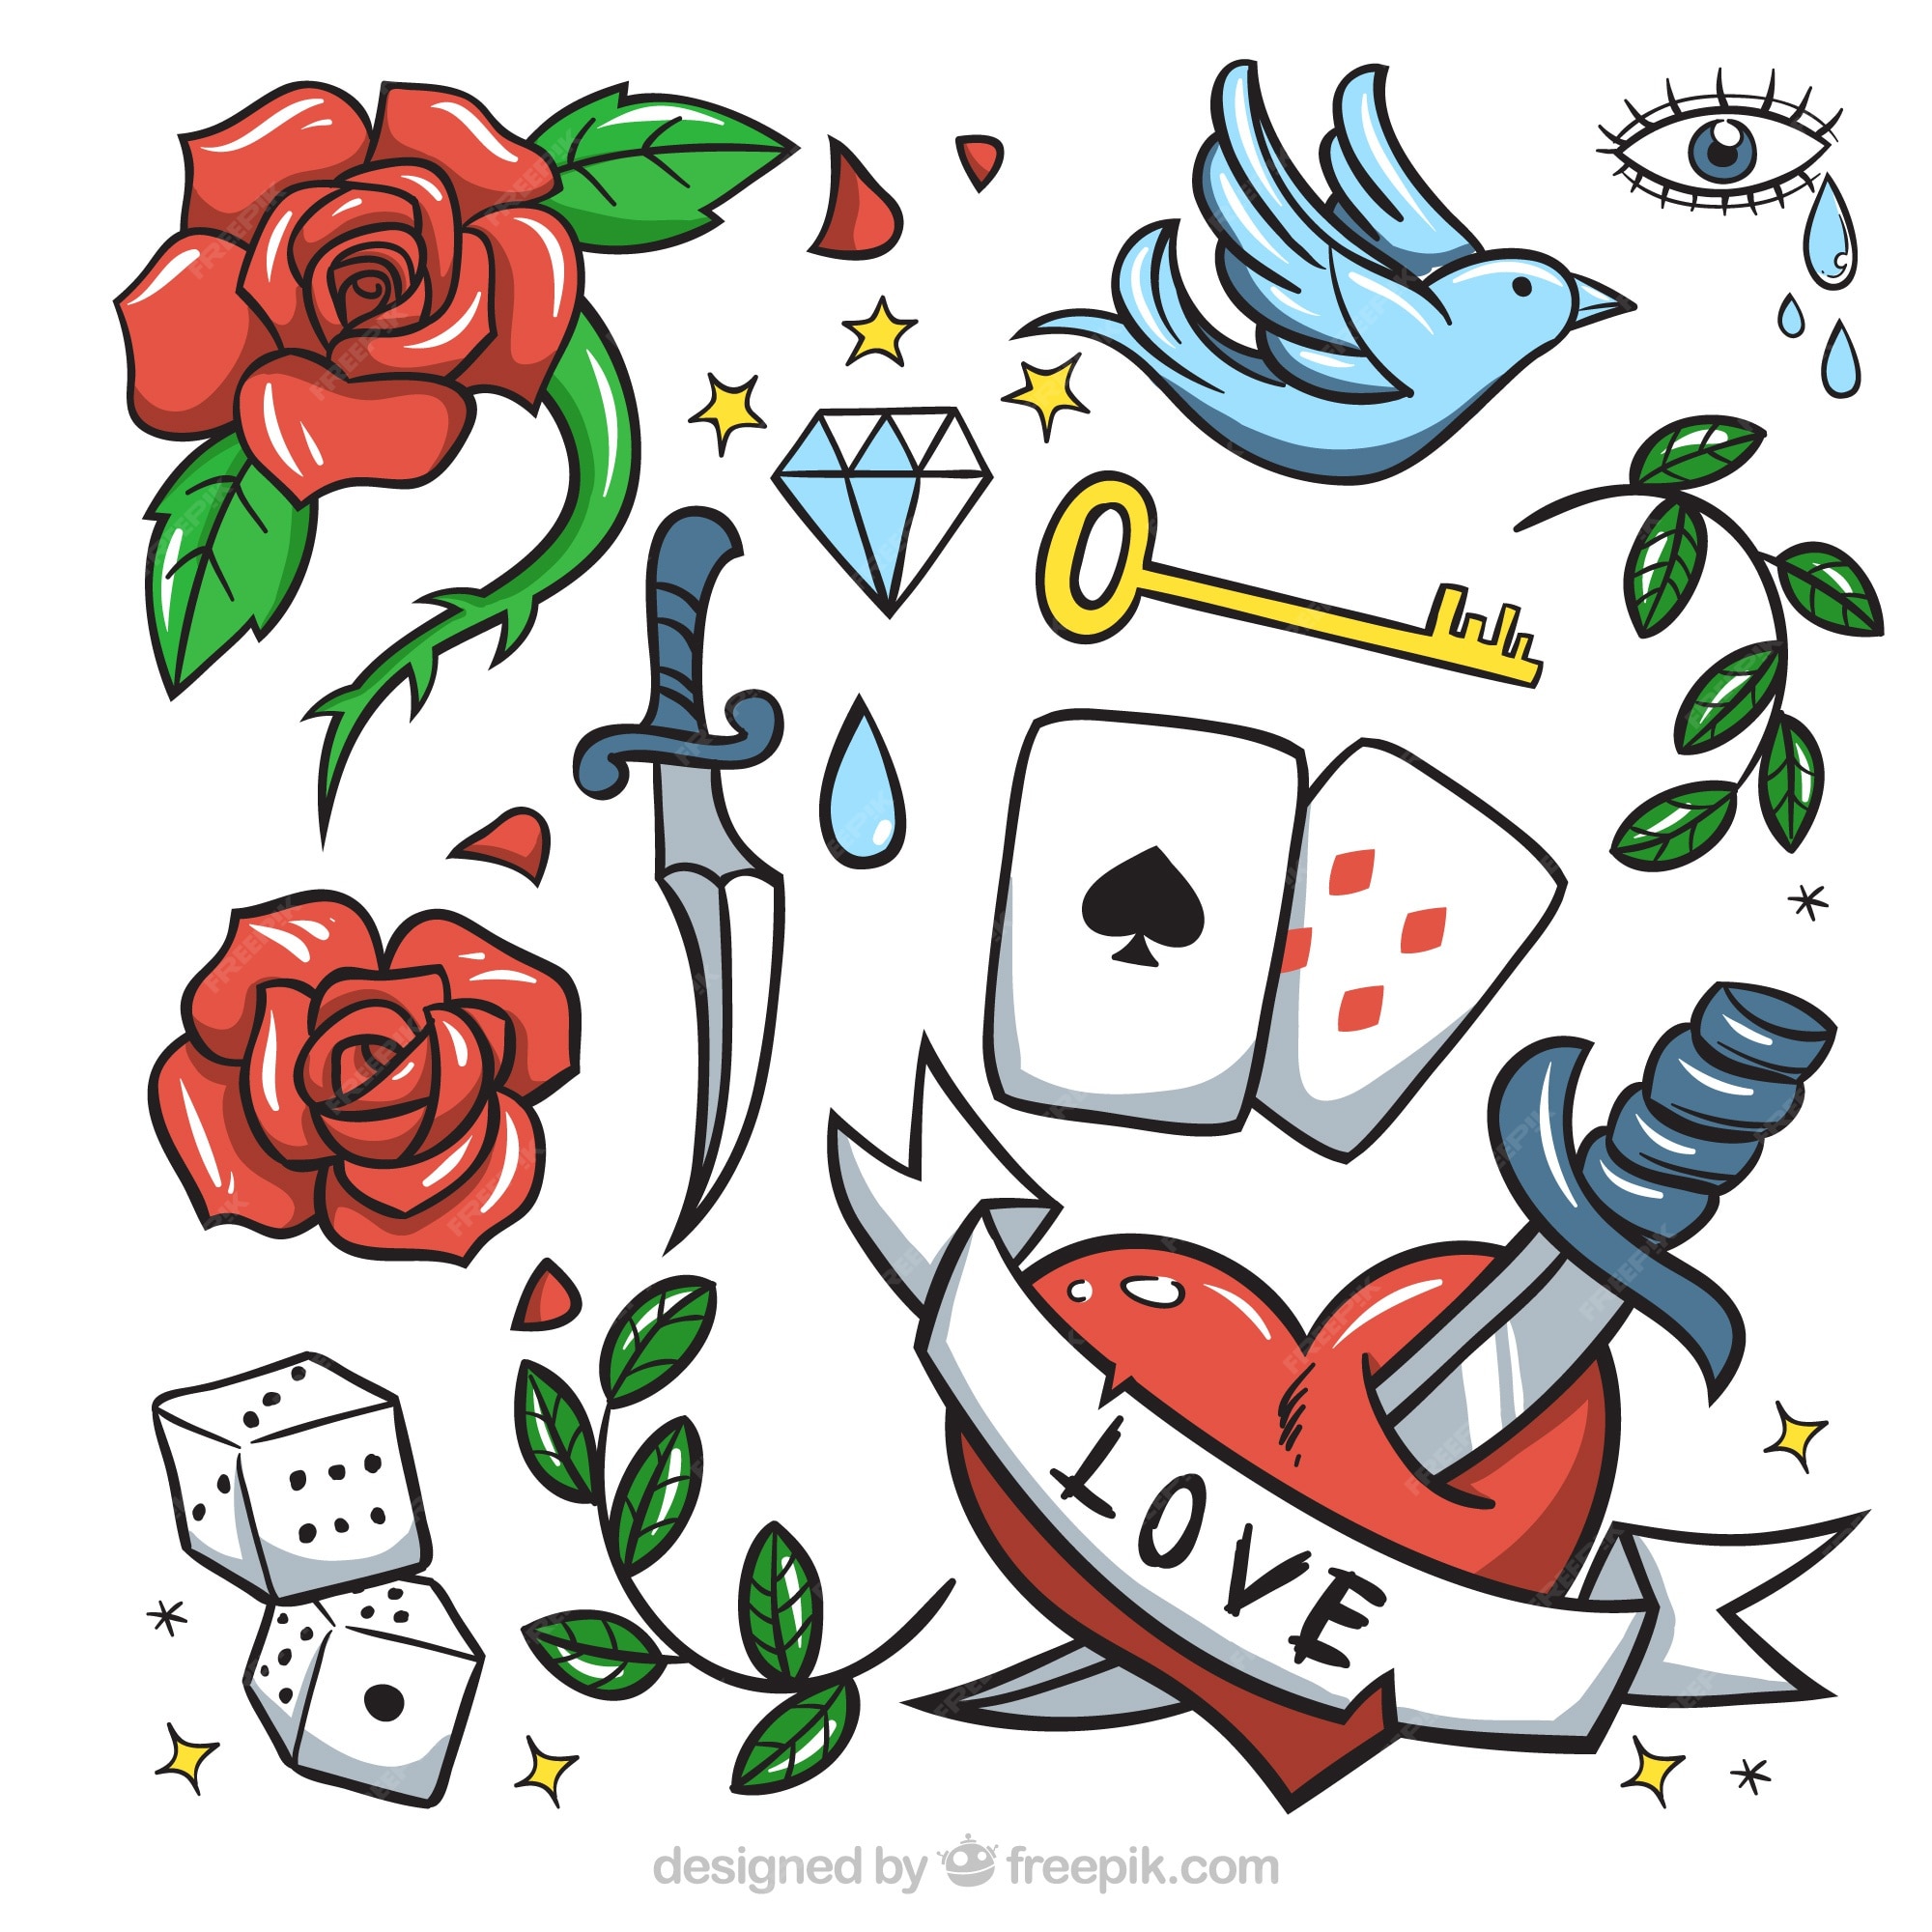 Heart tattoo Vectors & Illustrations for Free Download | Freepik